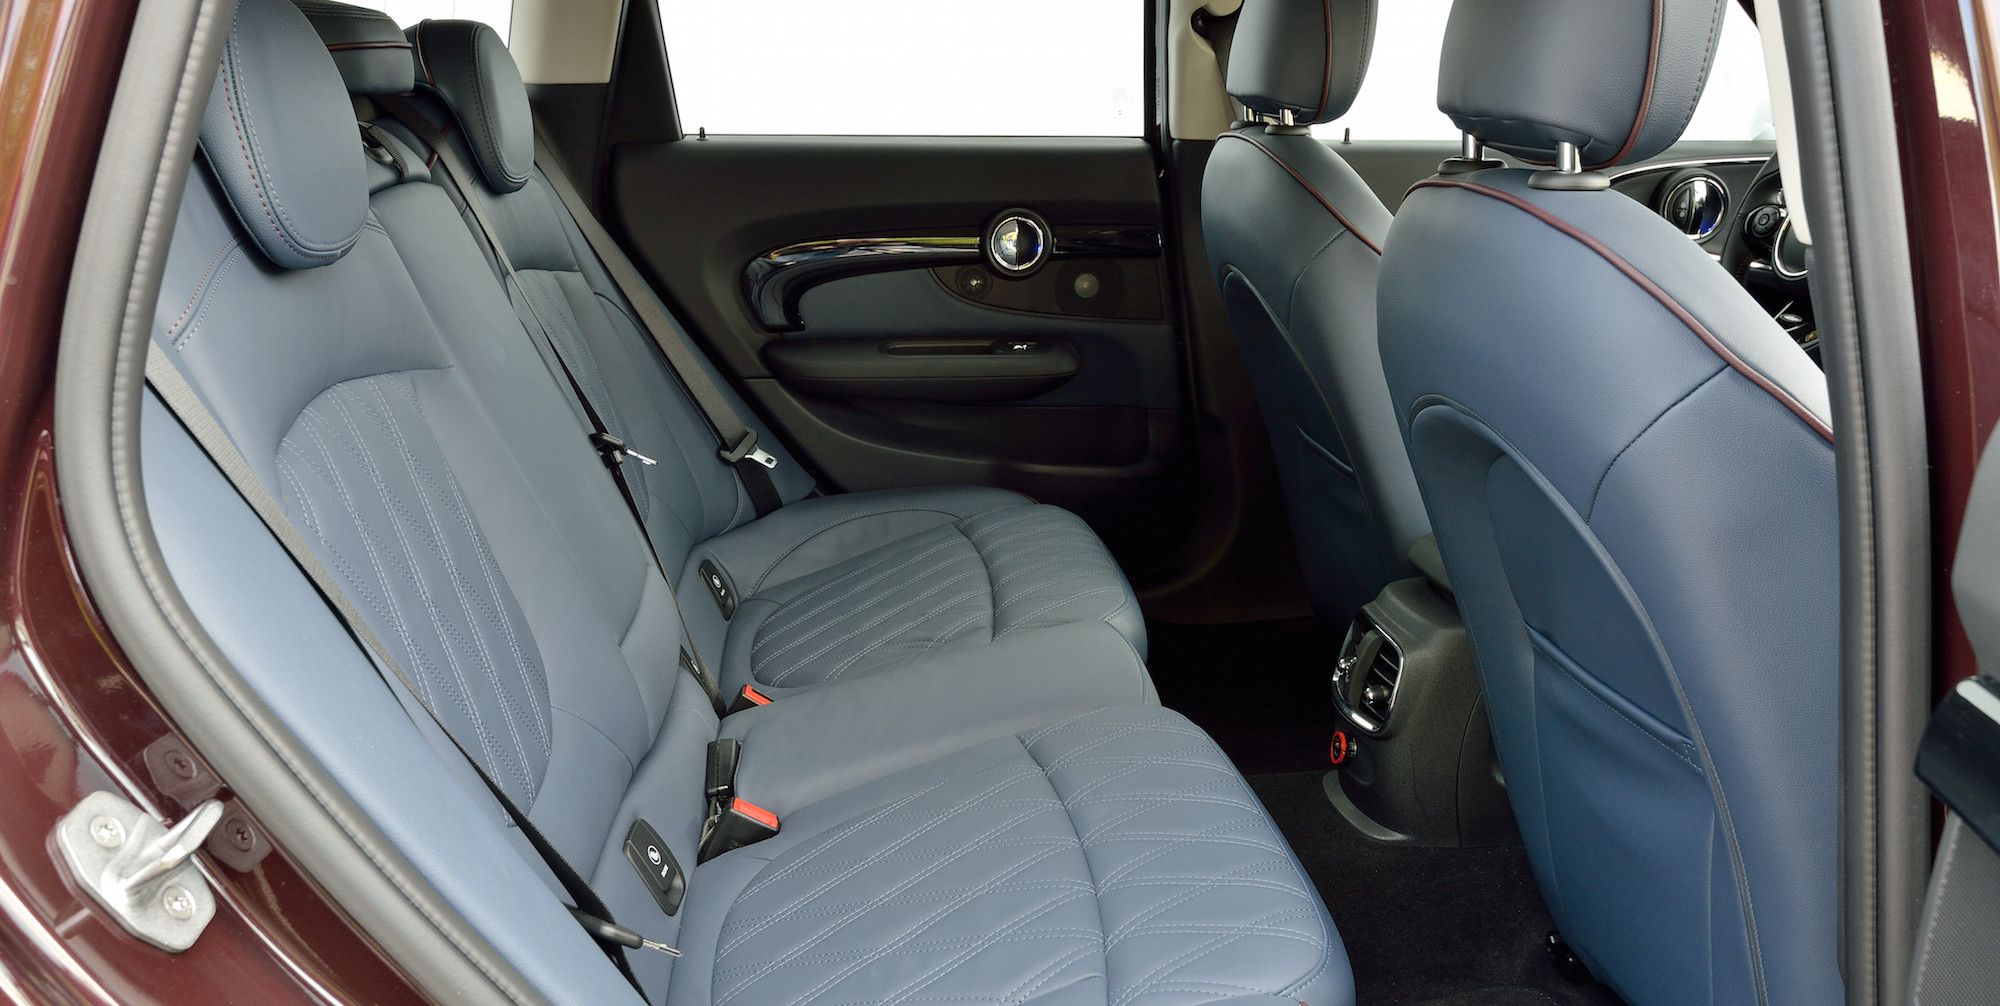 2016 Mini Cooper S Clubman Rear Passenger Seats Interior (View 3 of 17)